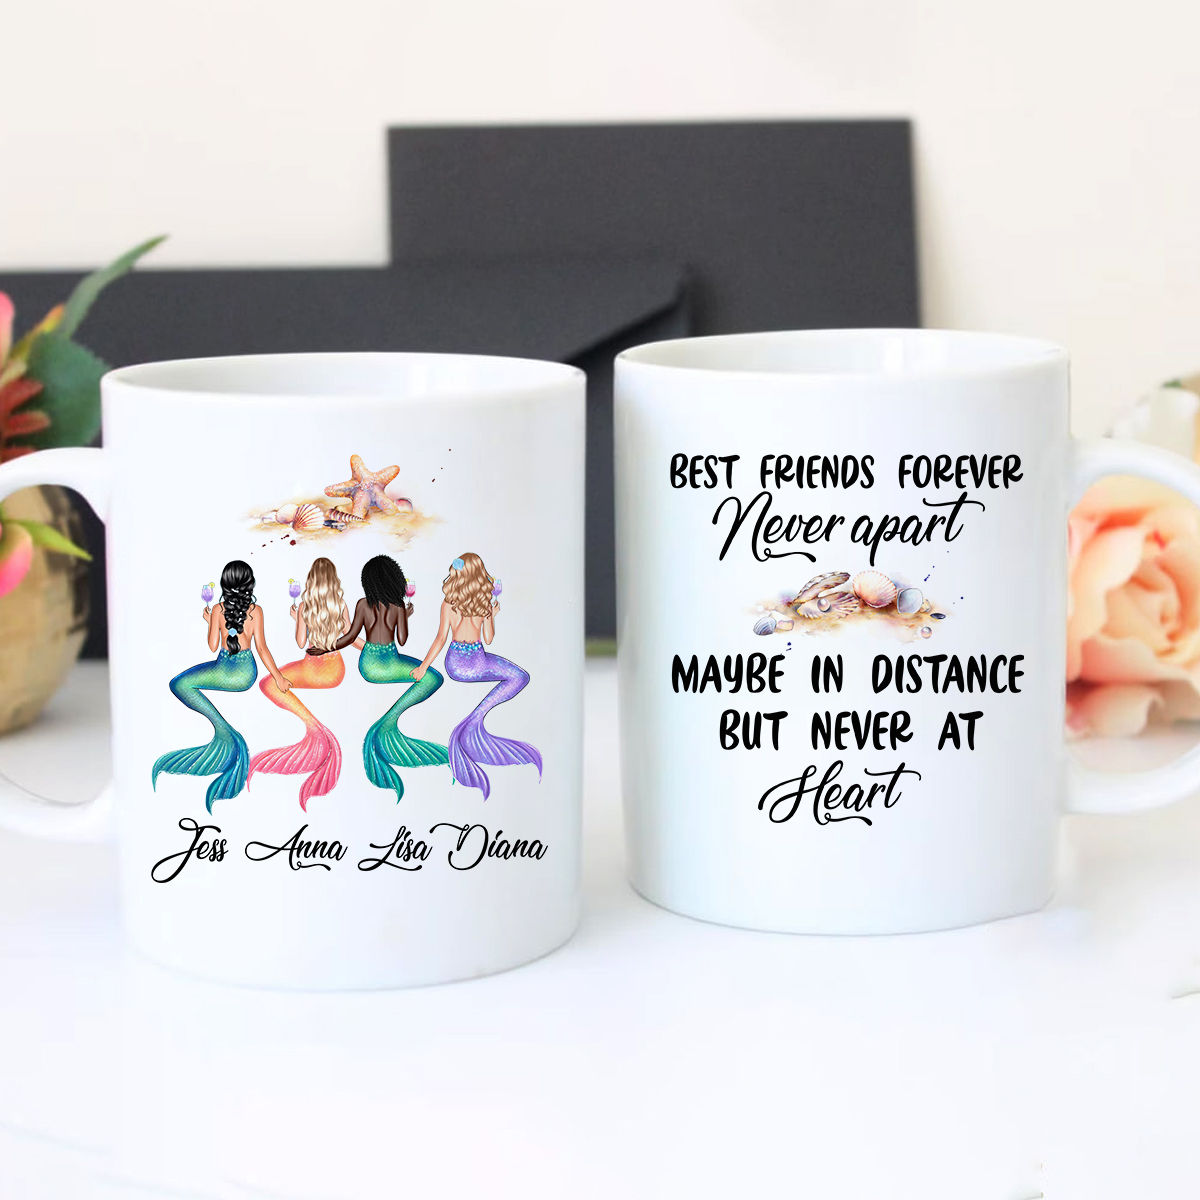 Mermaid Mug - Personalized Mermaid Girls Mug, Best Friends Forever Never apart Mug, Mug Lovers Gift for Friends 42578